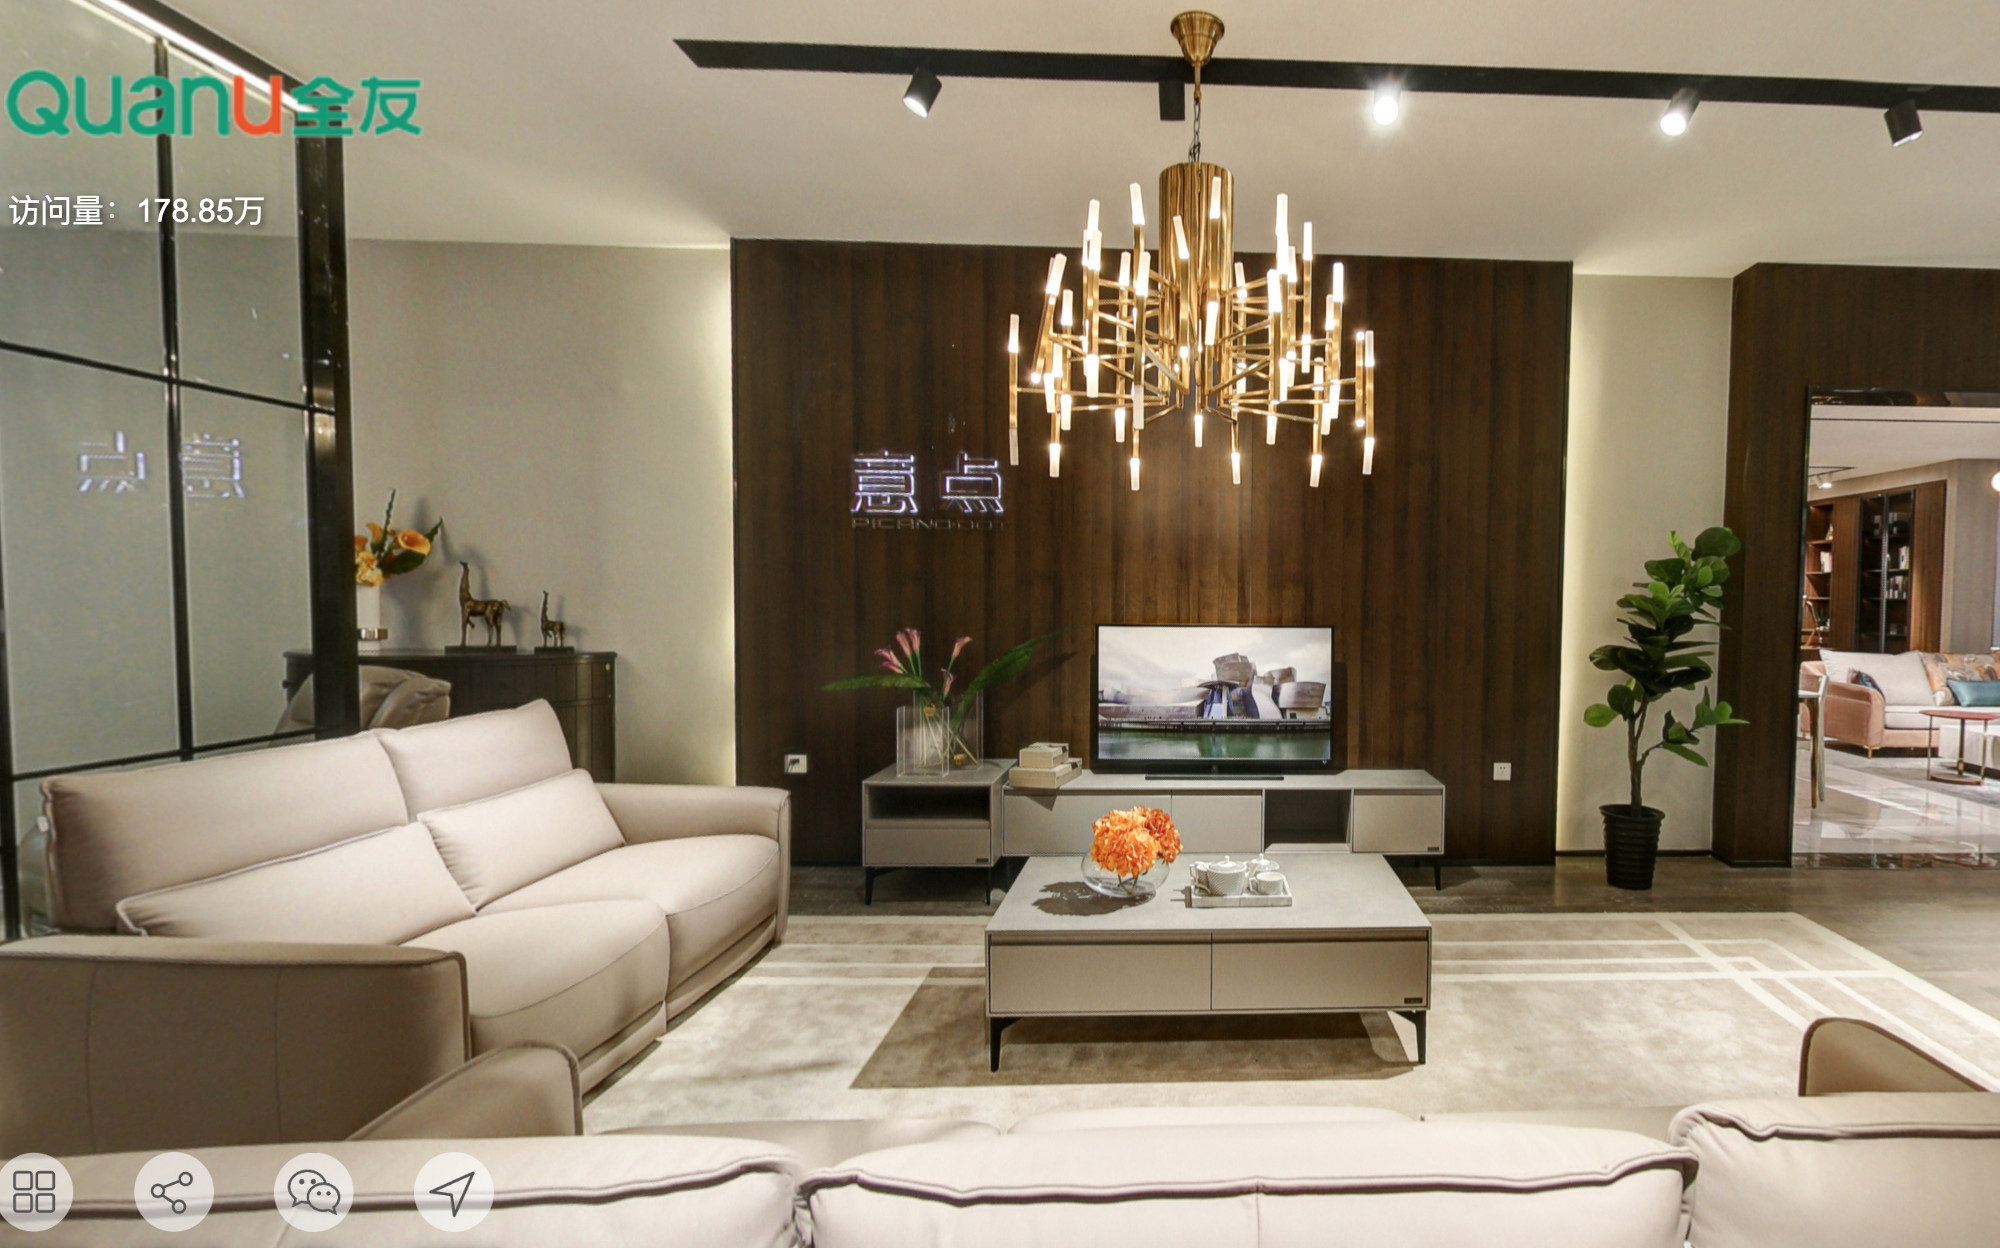 Top Home Decor Trends - Best Living Room Ideas